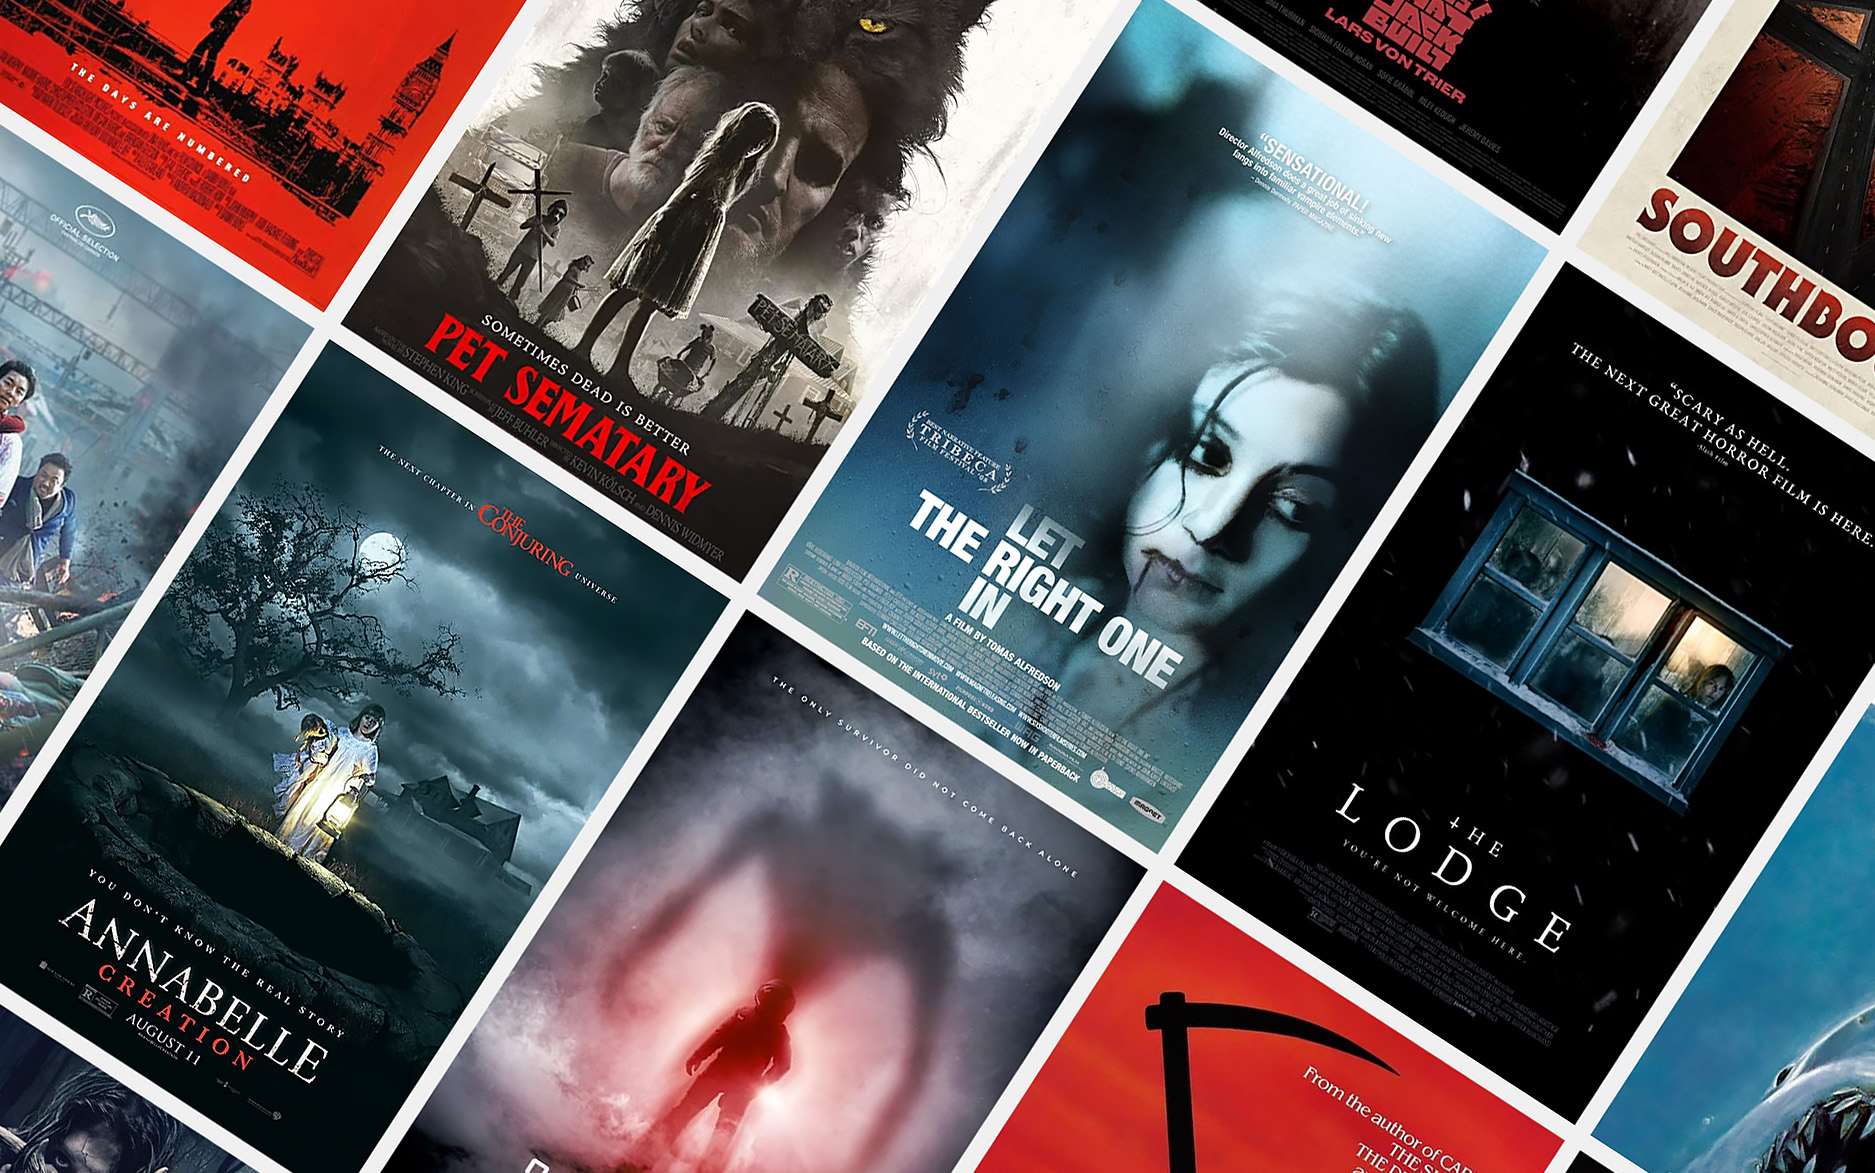 Best Horror Movies on Hulu